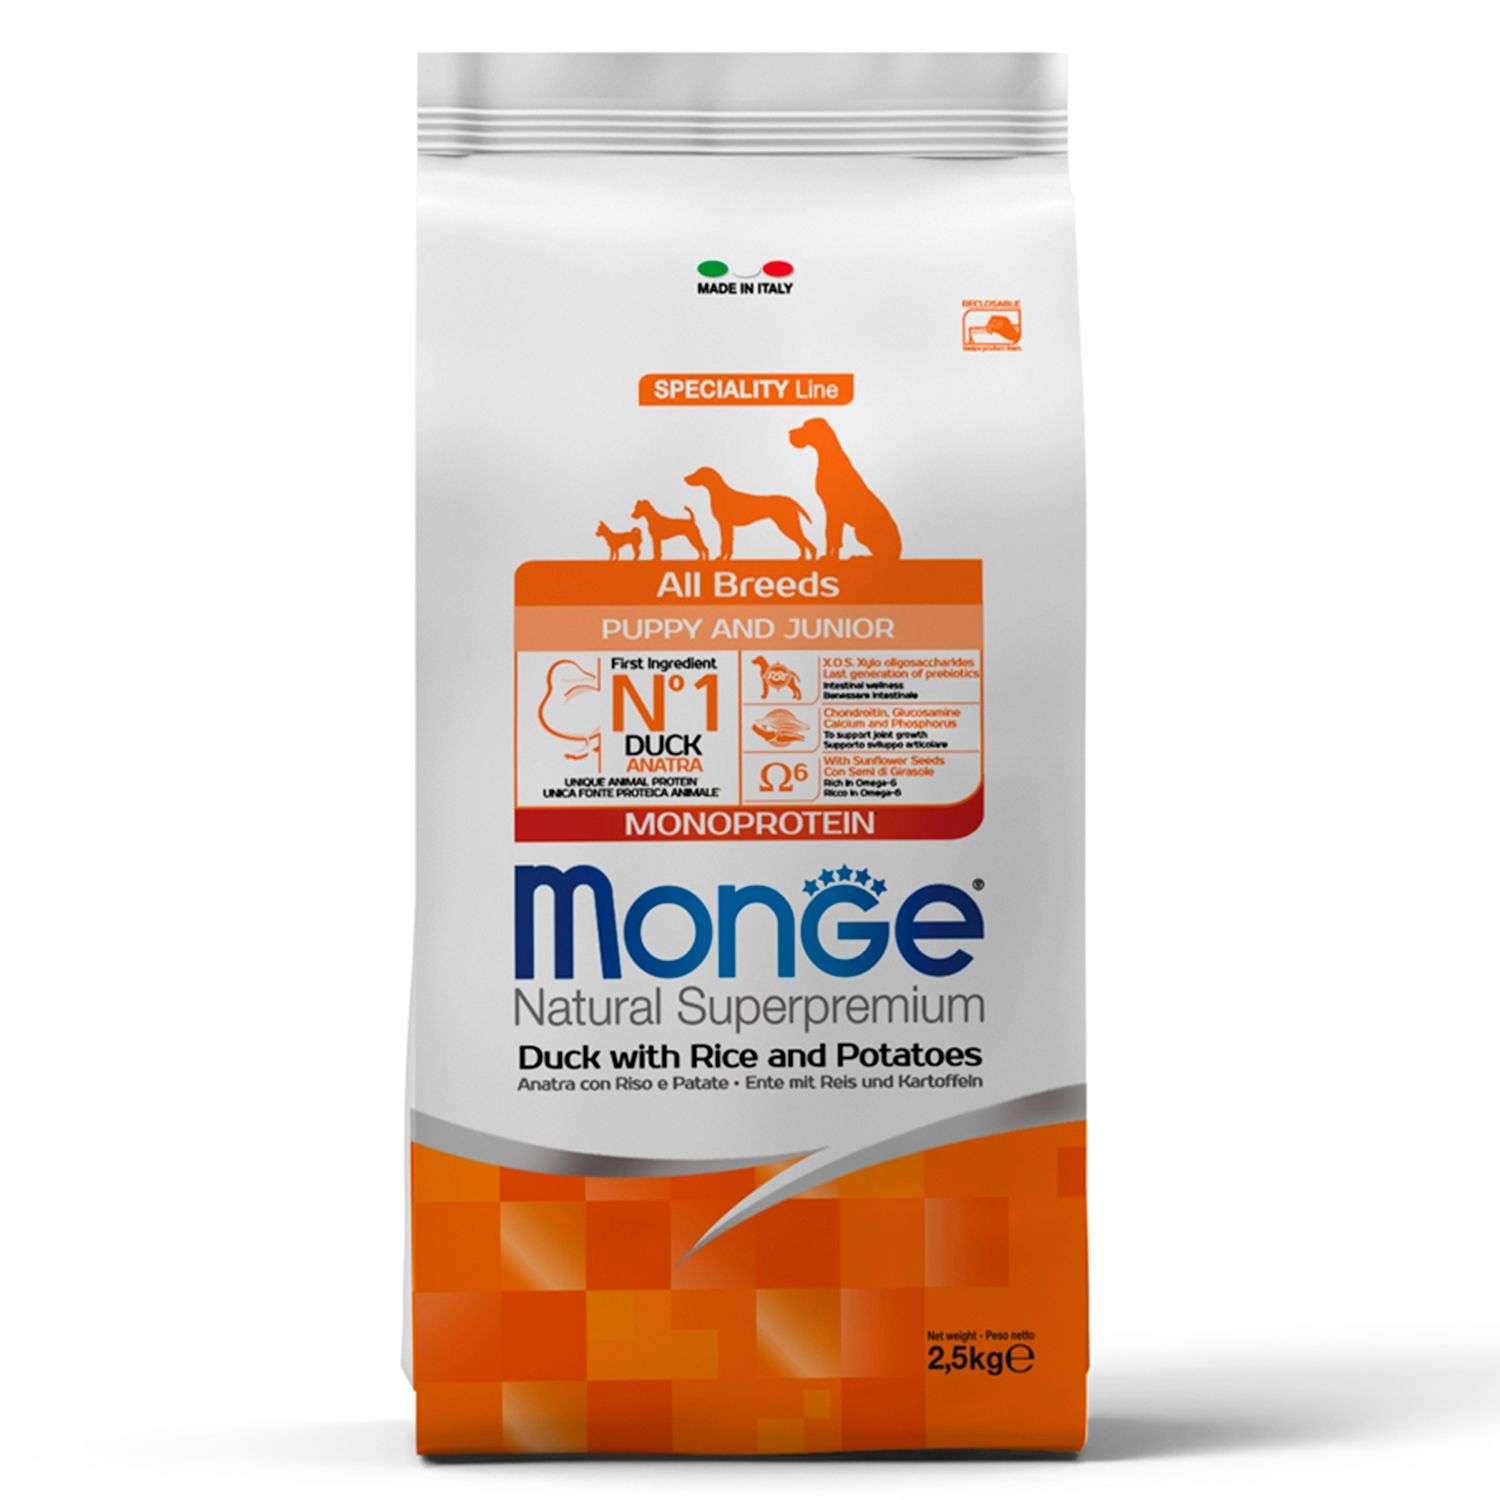 Корм для щенков MONGE 2.5кг Dog Speciality Line Monoprotein всех пород утка-рис-картофель - фото 1